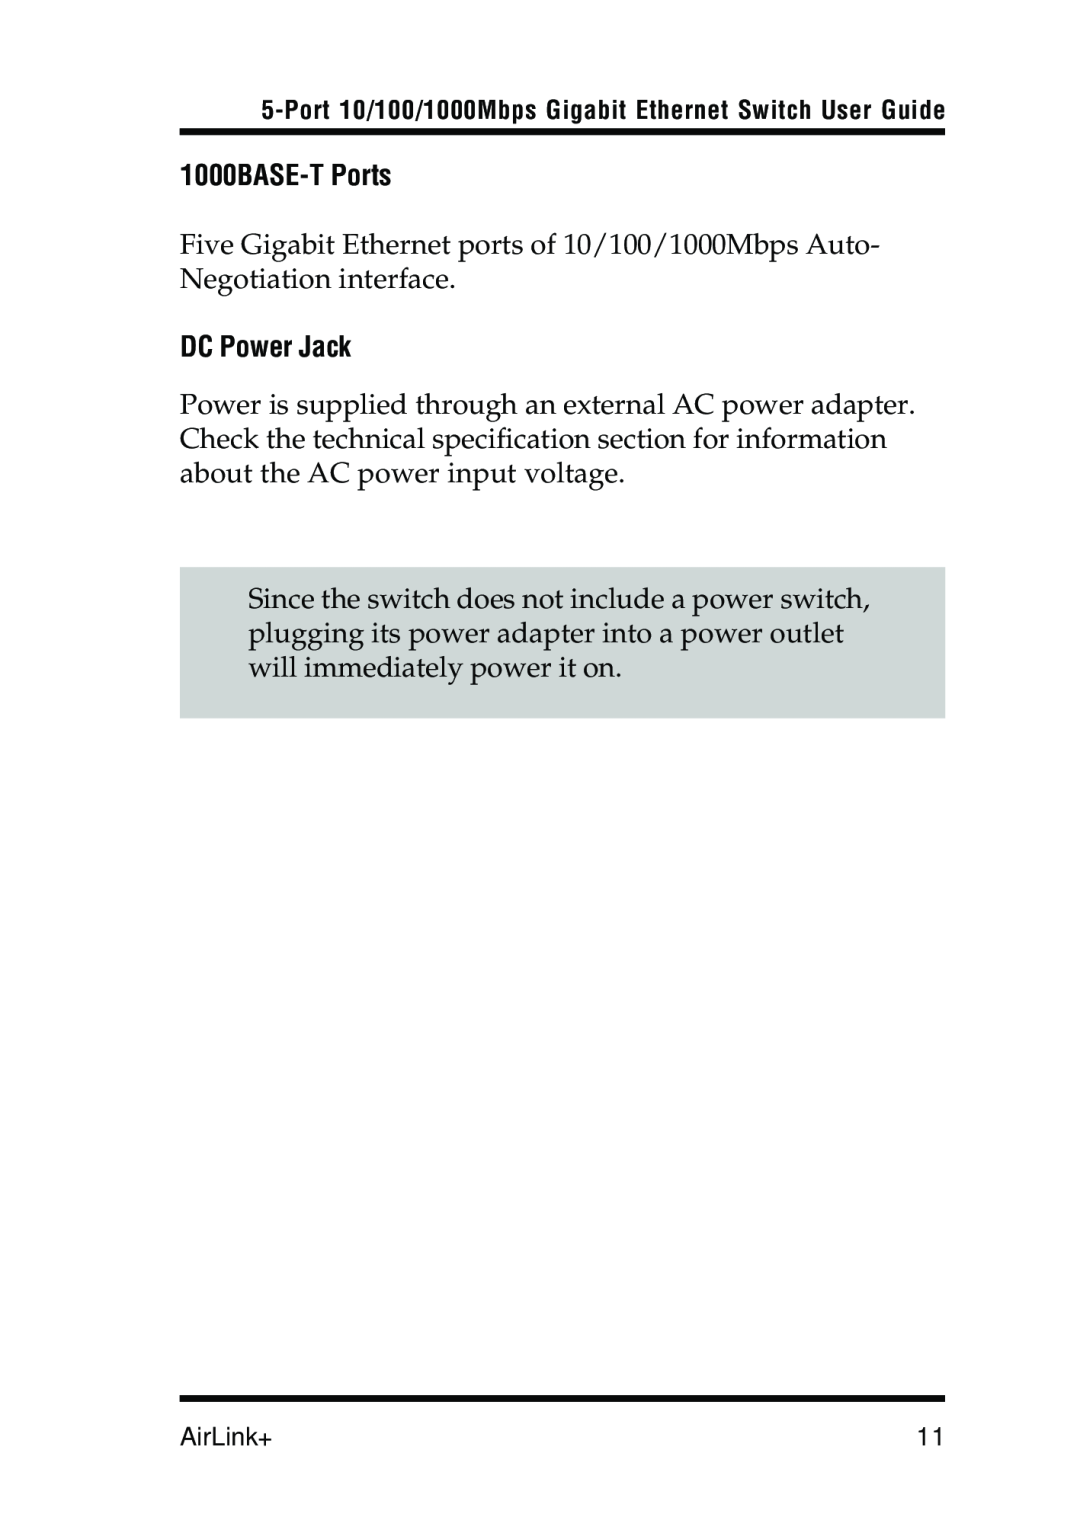 Airlink 5-Port manual 1000BASE-T Ports, DC Power Jack 